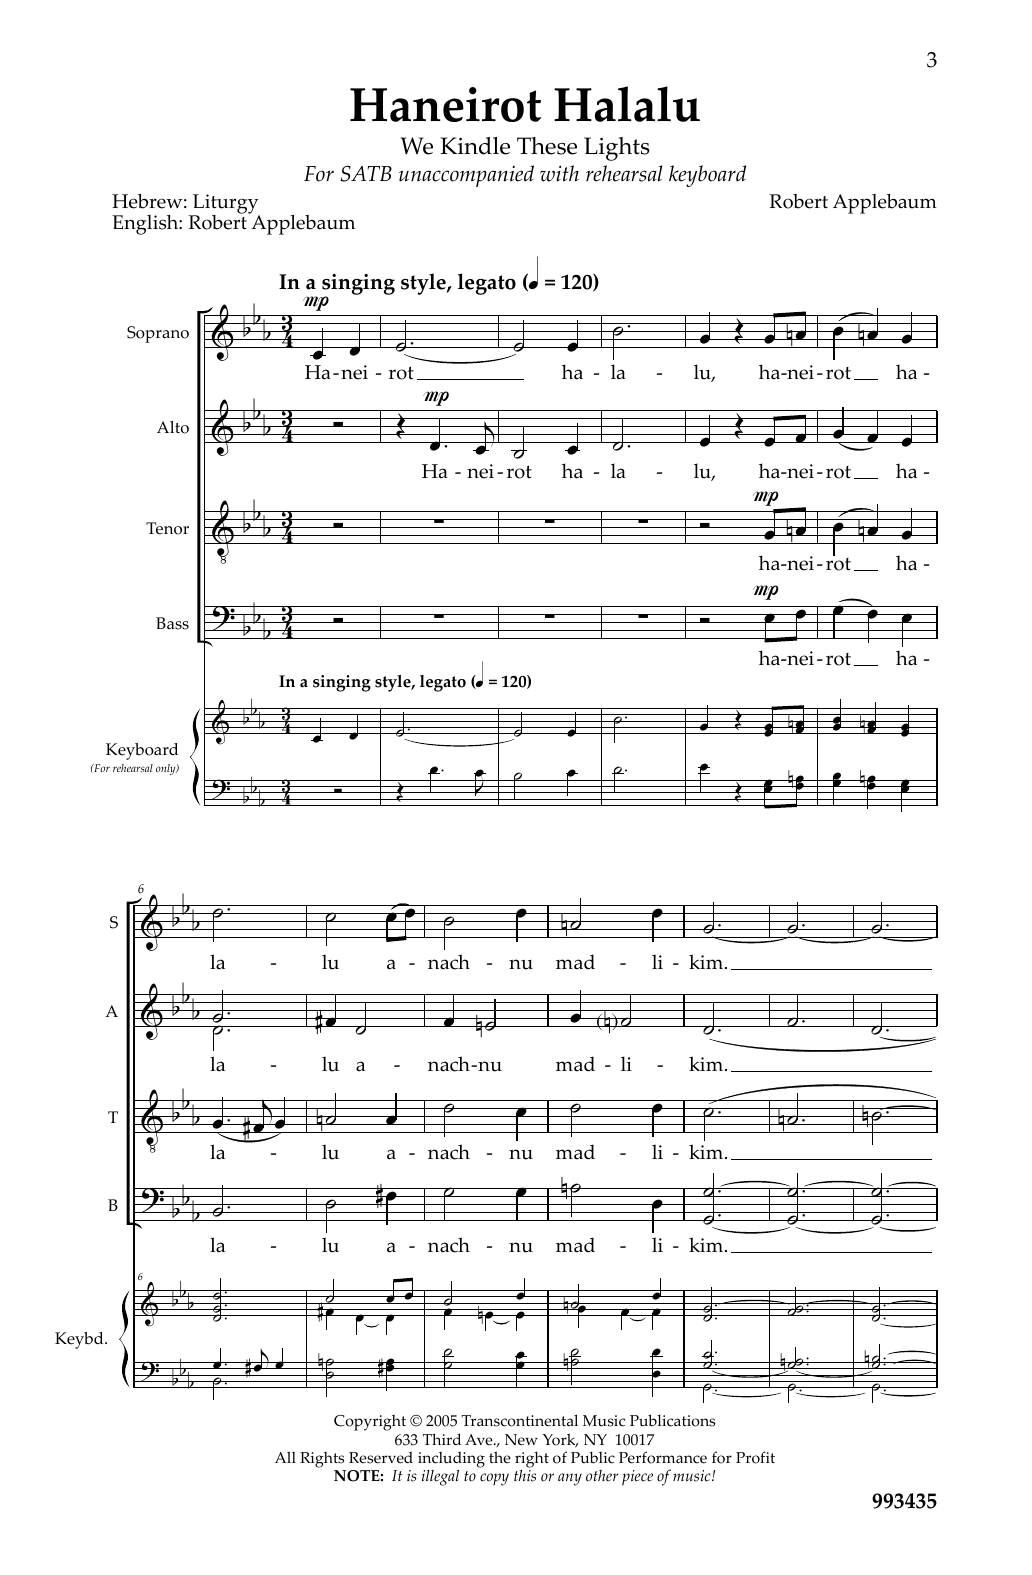 Robert Applebaum Haneirot Halalu (We Kindle These Lights) Sheet Music Notes & Chords for SATB Choir - Download or Print PDF